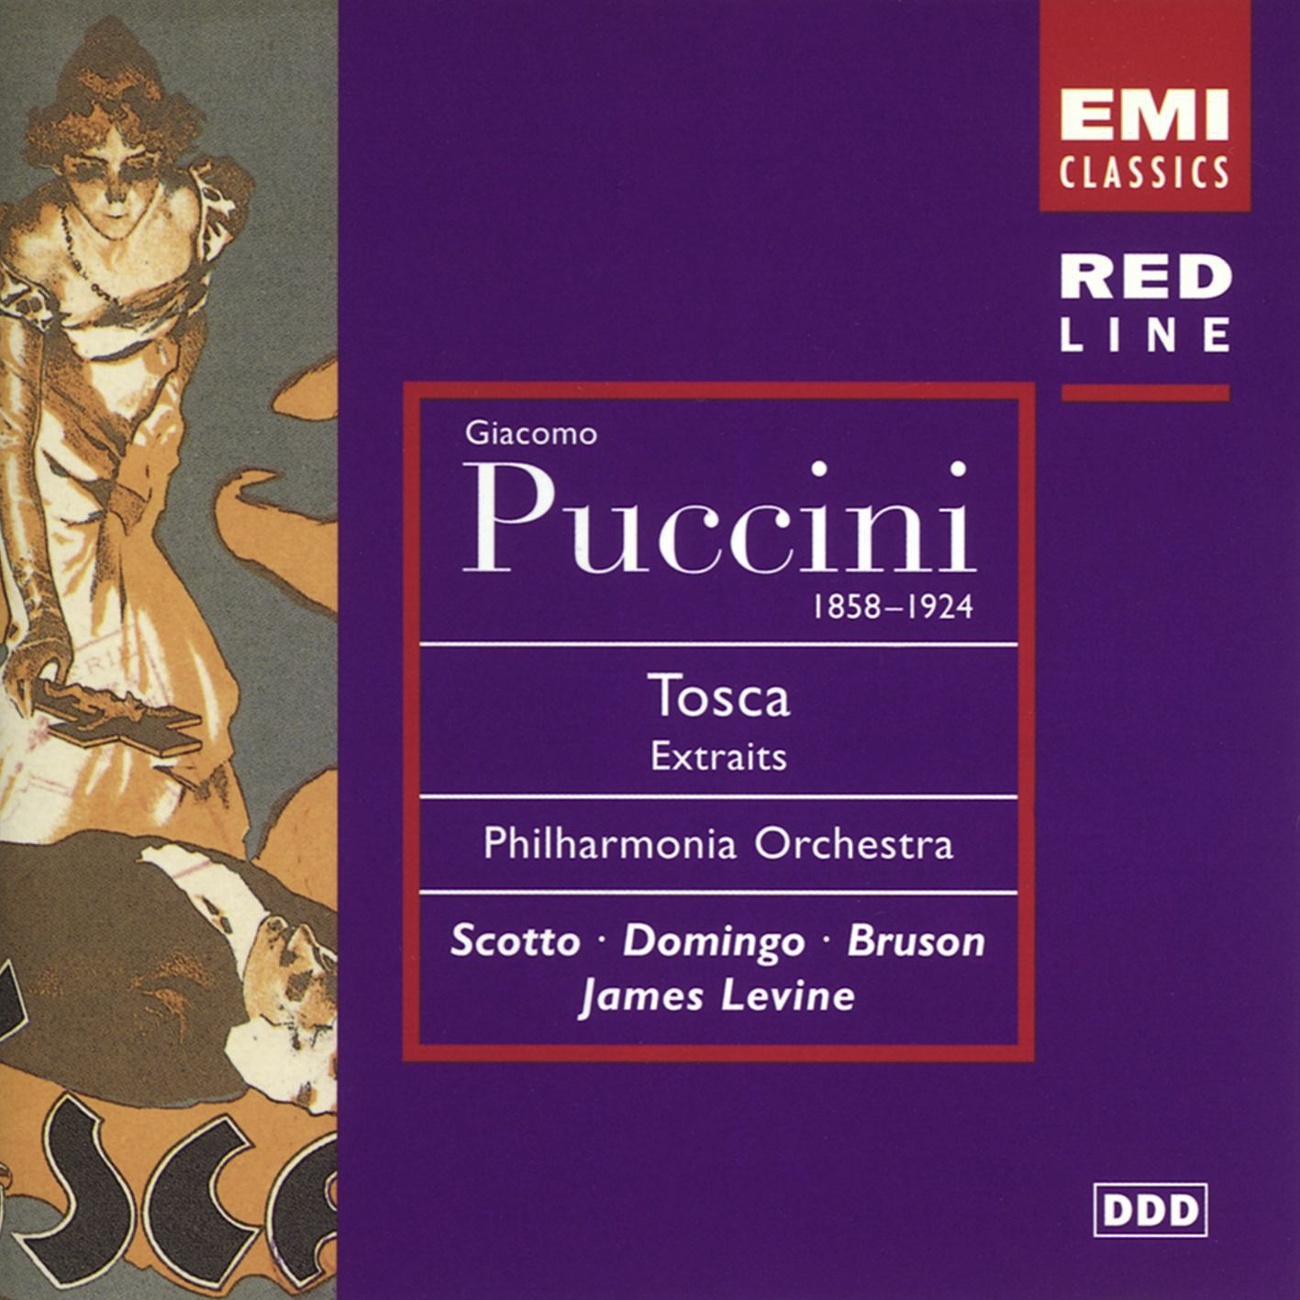 Tosca - Opera in three acts (1997 Digital Remaster), Act III: Com'è lunga l'attesa! (Tosca)